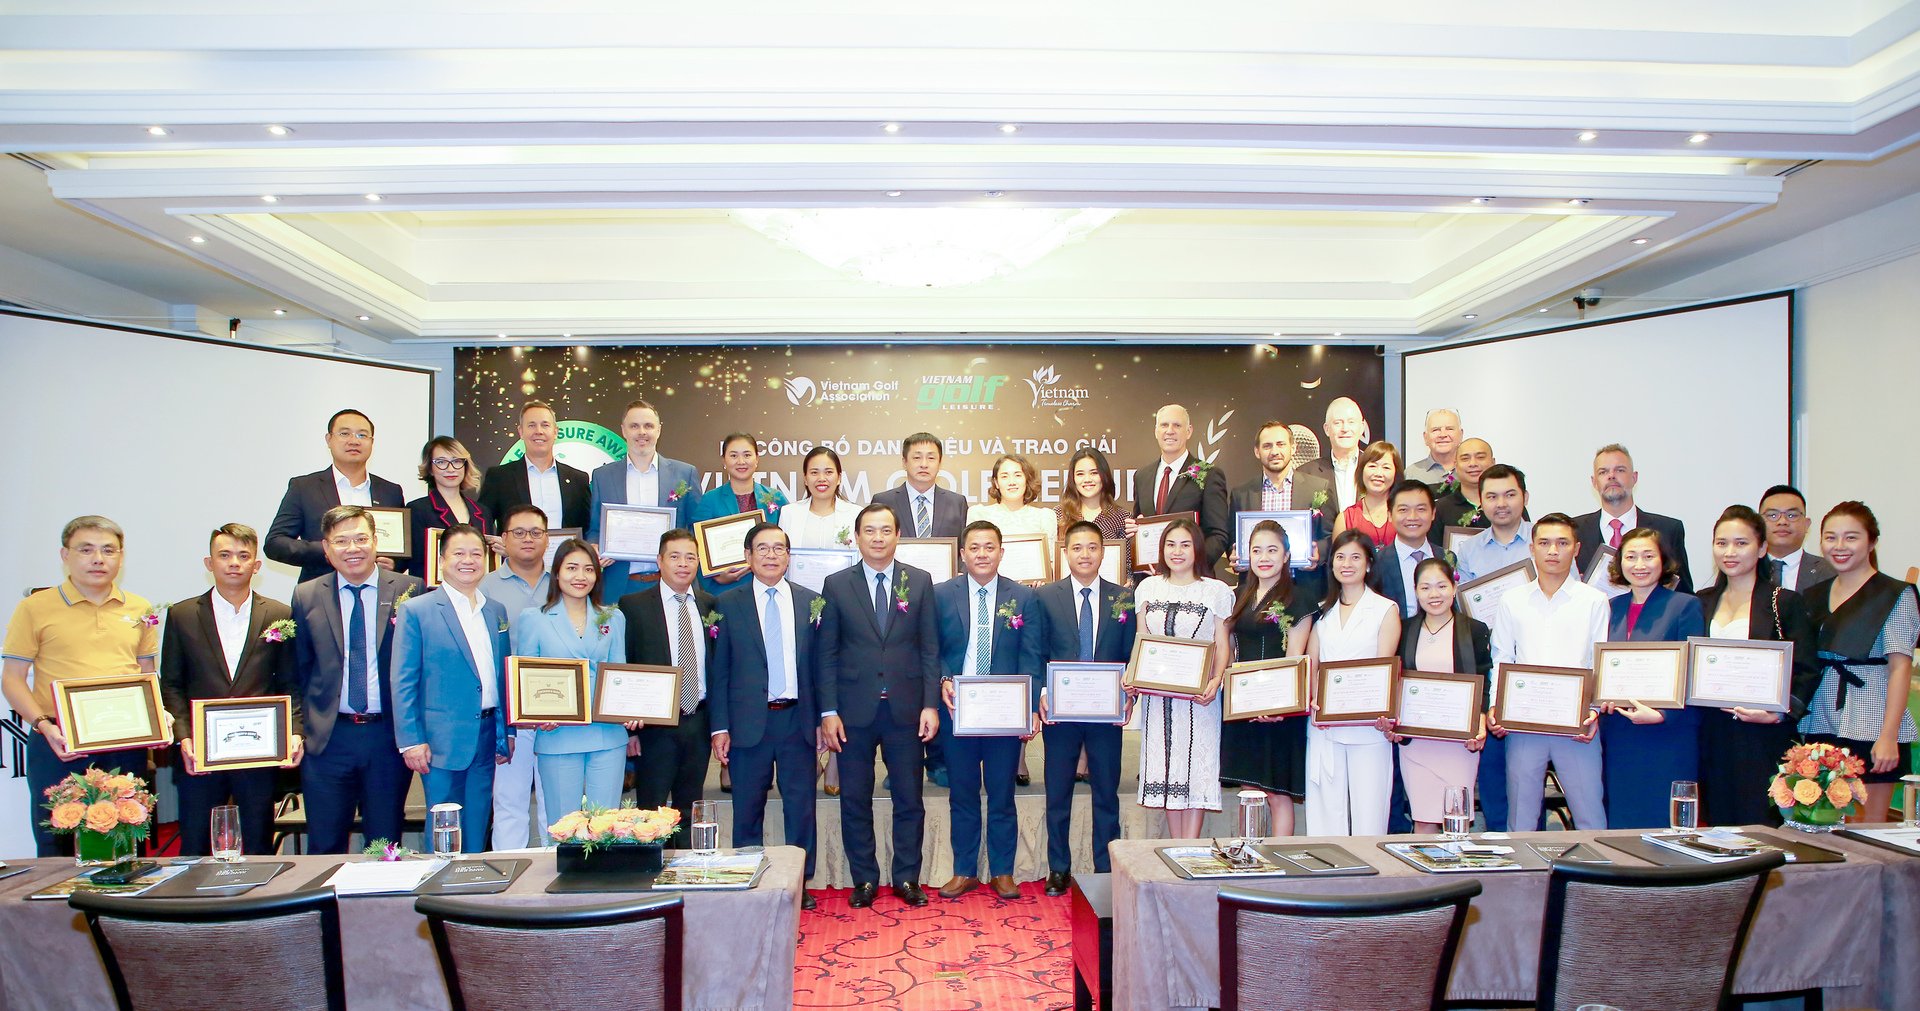 KN Golf Links excellently won 2 awards at Vietnam Golf & Leisure Awards 2022